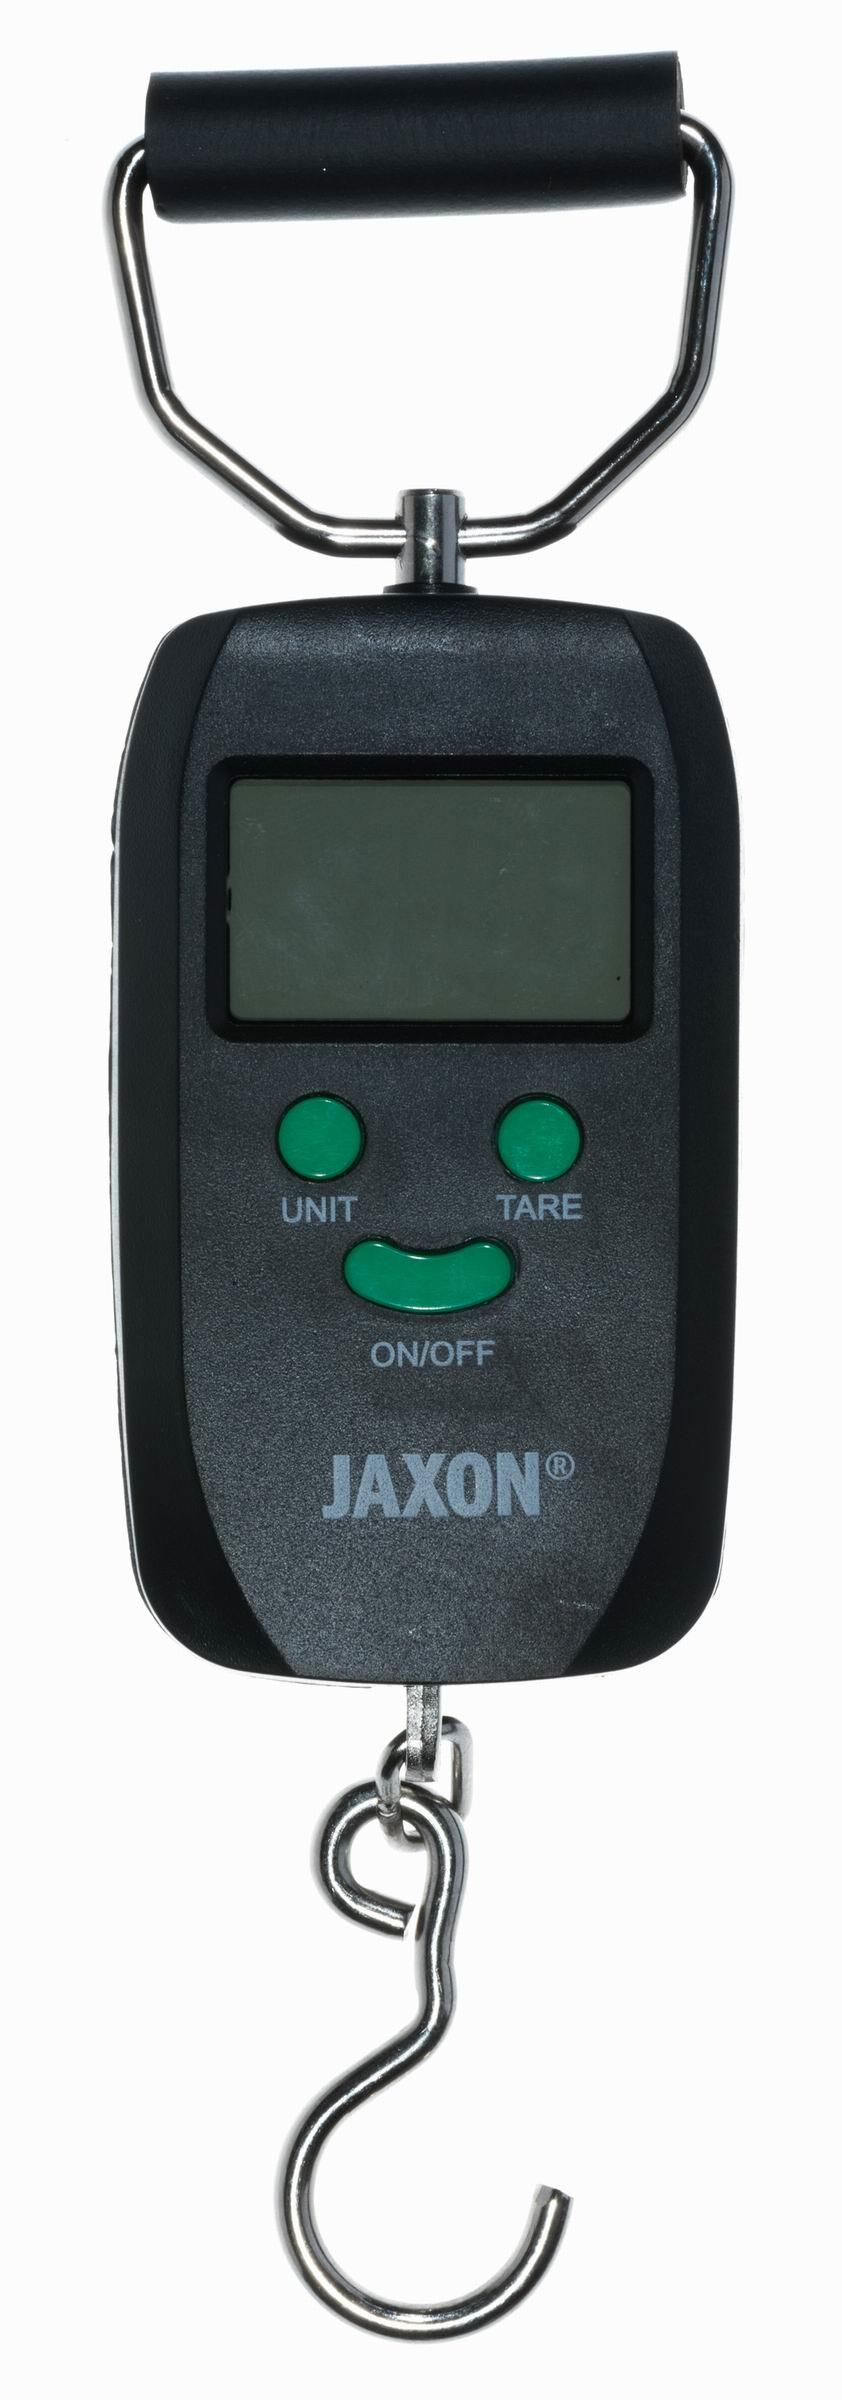 Waga wędkarska elektroniczna Jaxon AK-WAM016